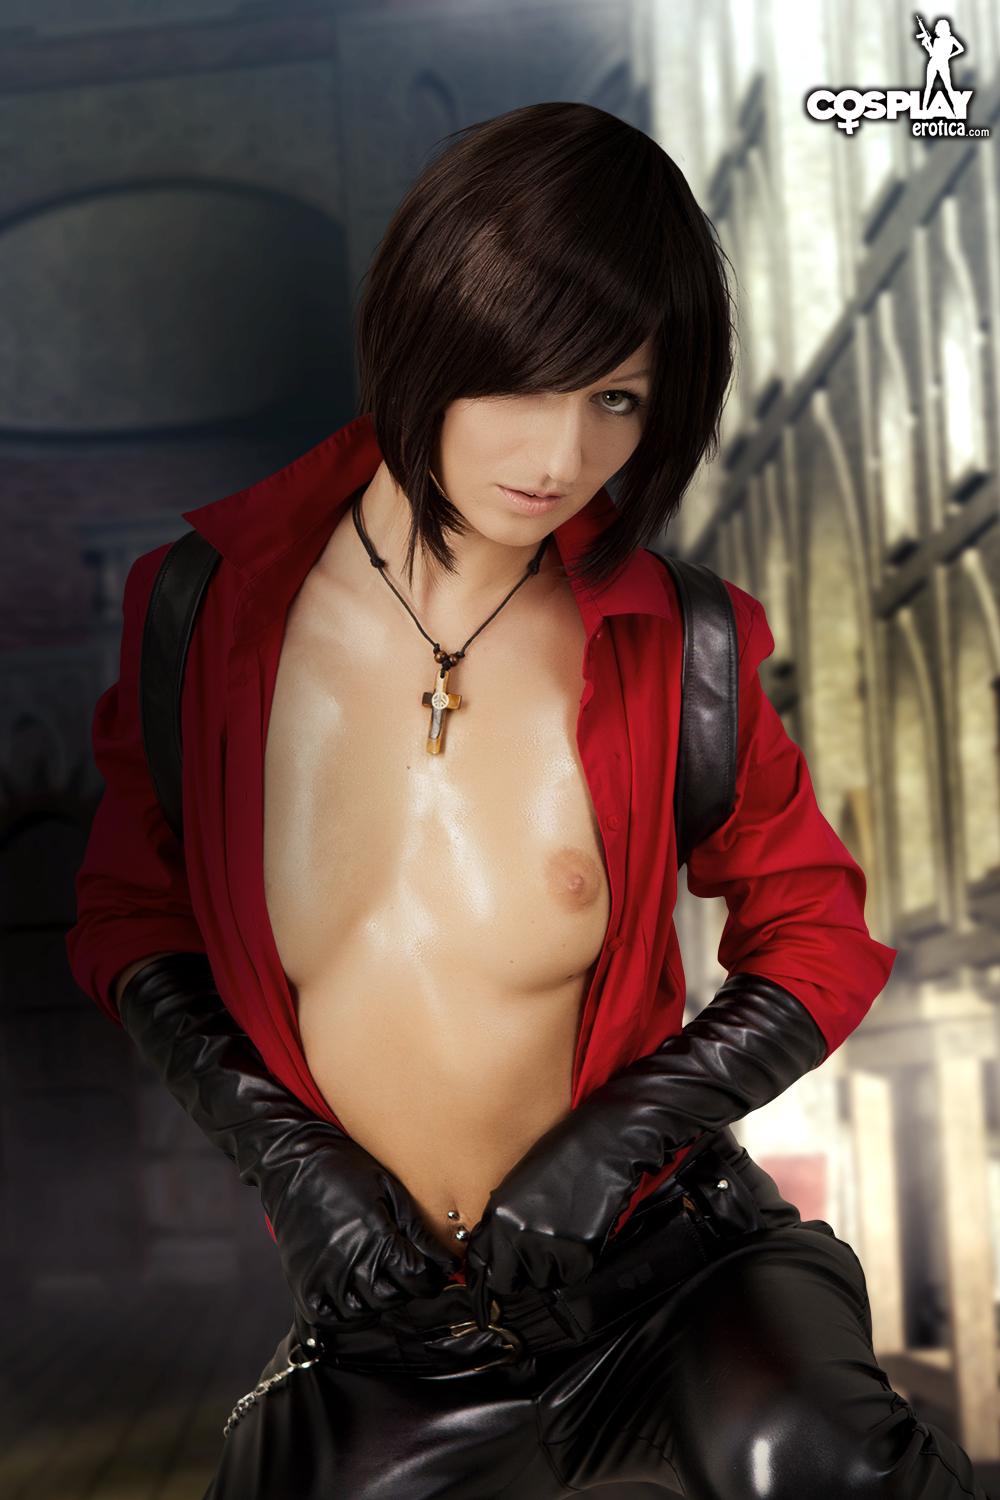 Recommendation Treasure block CosplayErotica - Ada Wong (Resident Evil) nude cosplay